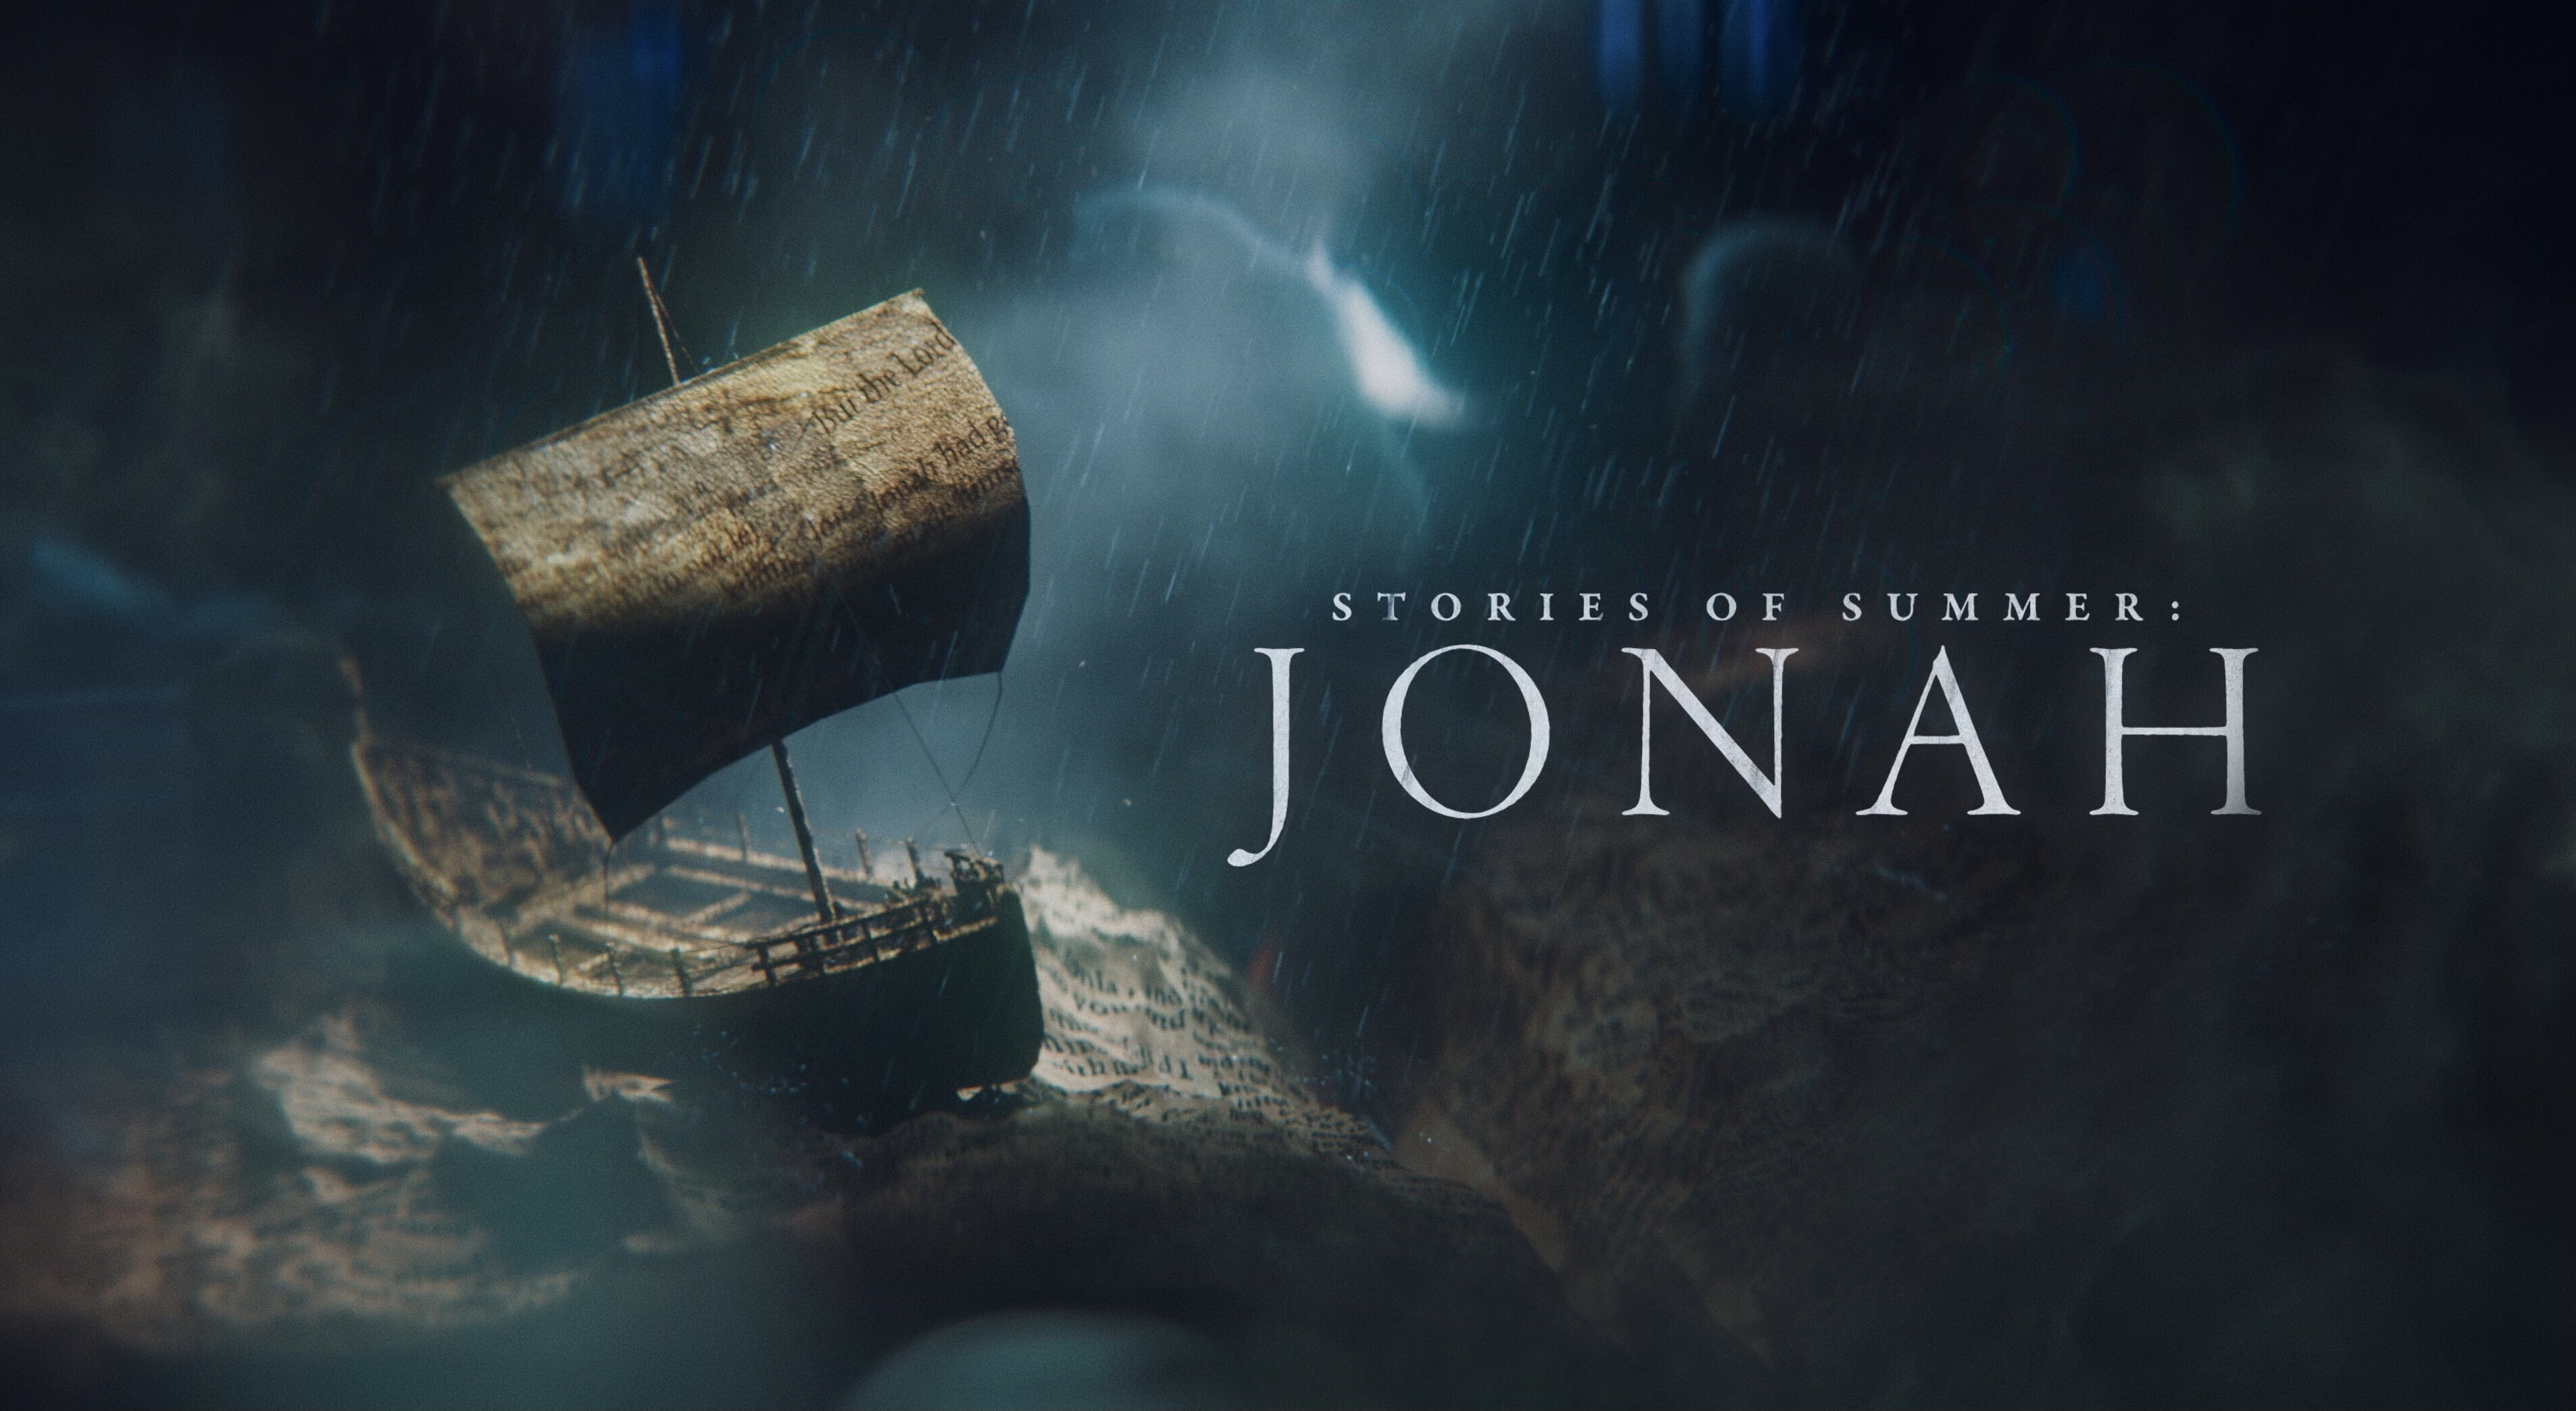 Stories of Summer: Jonah